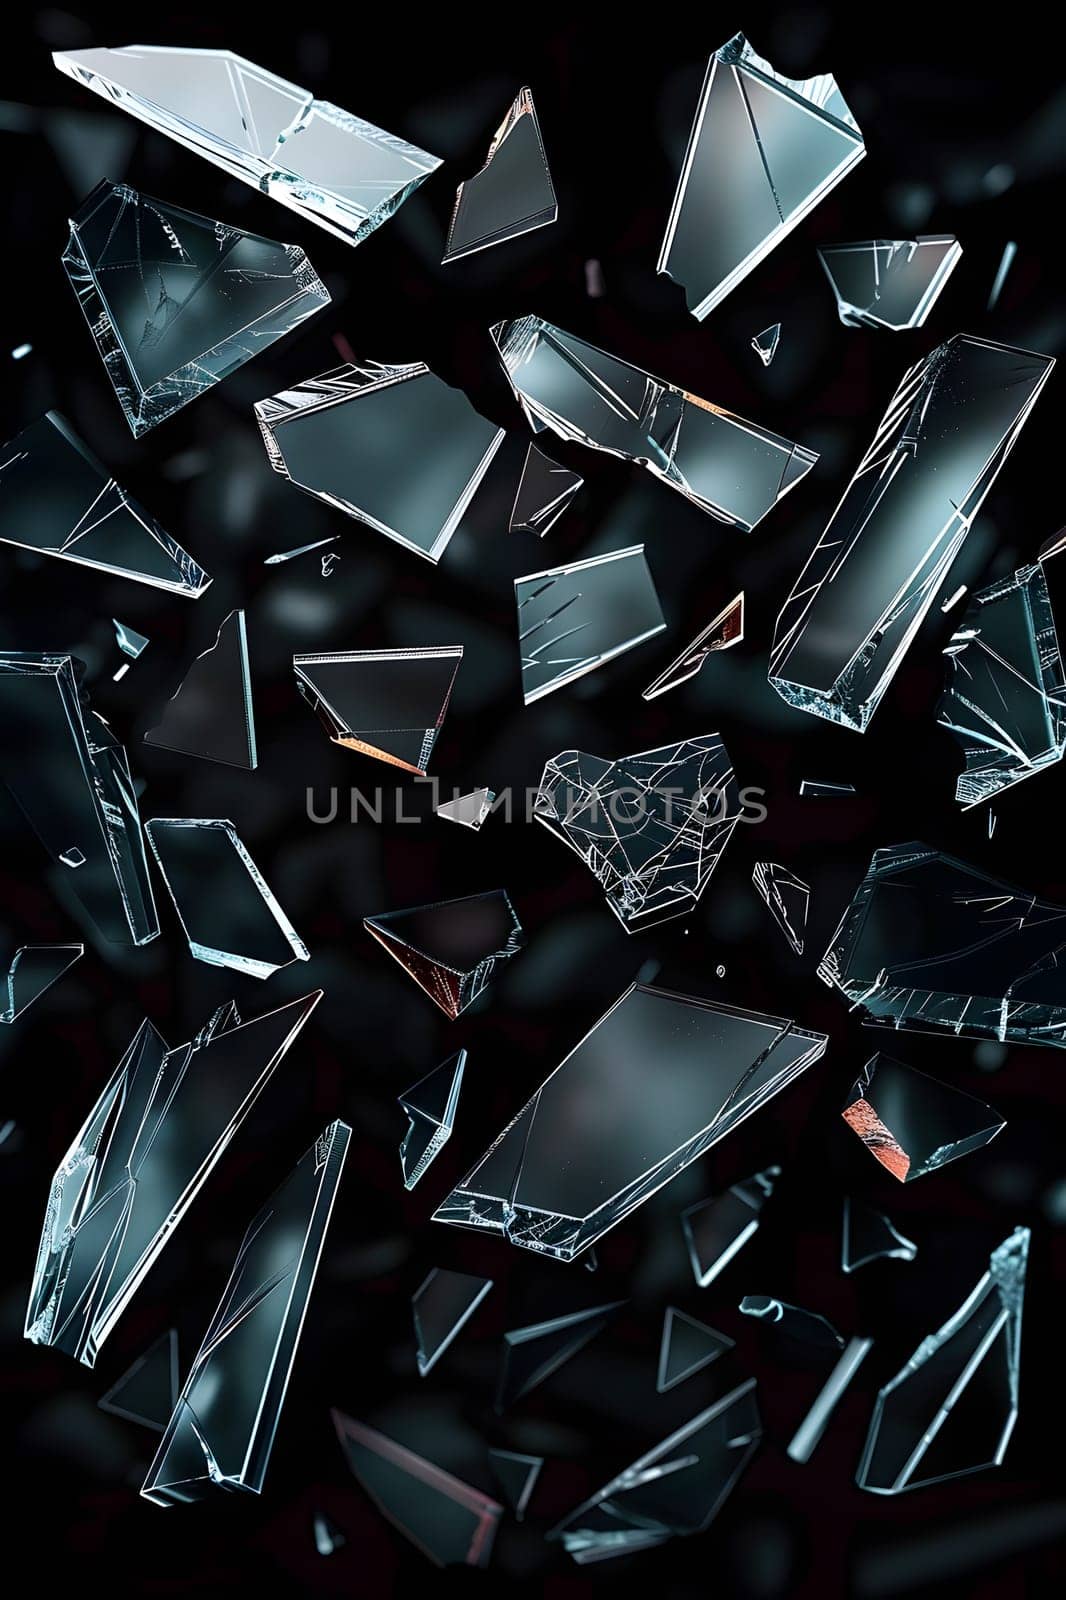 Symmetrical pattern of broken glass on black background by Nadtochiy